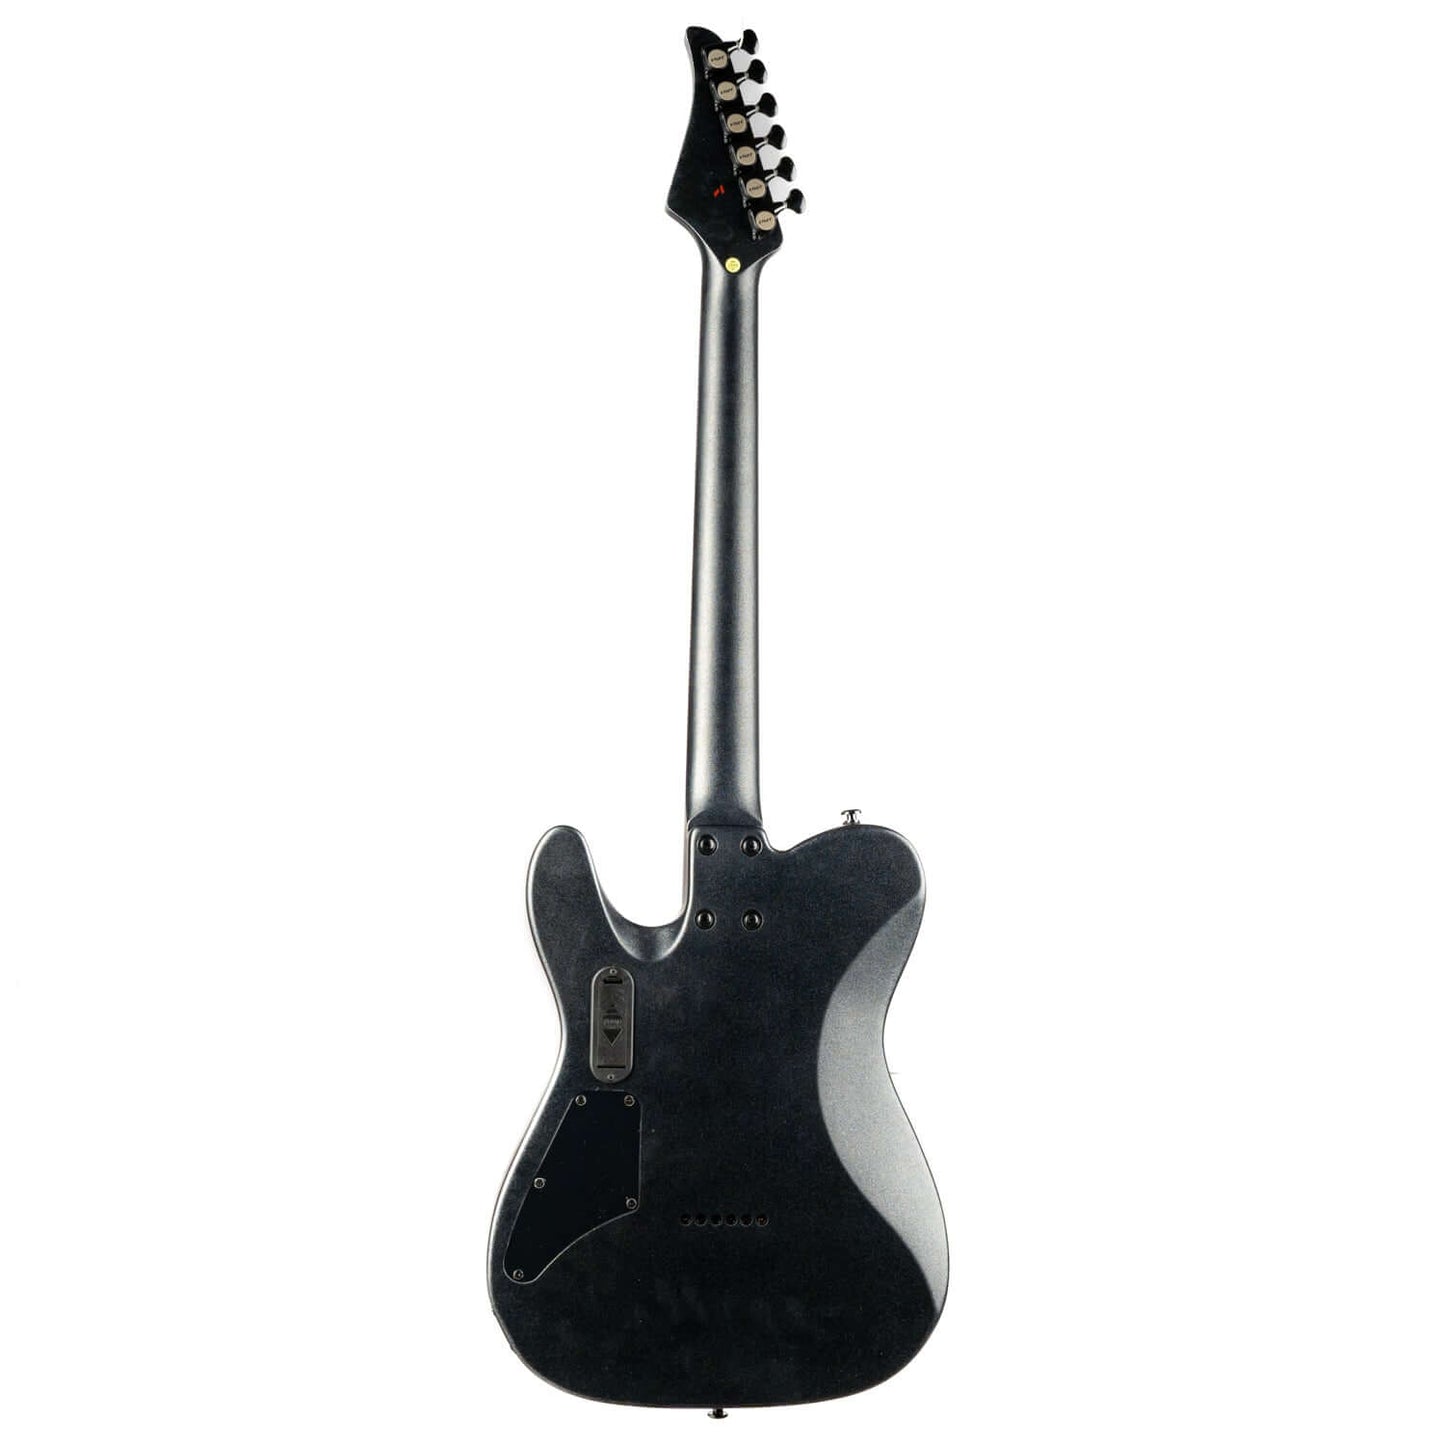 EART Guitar TL-281 Roasted Canada Maple Neck Rock Metal Electric Guitars